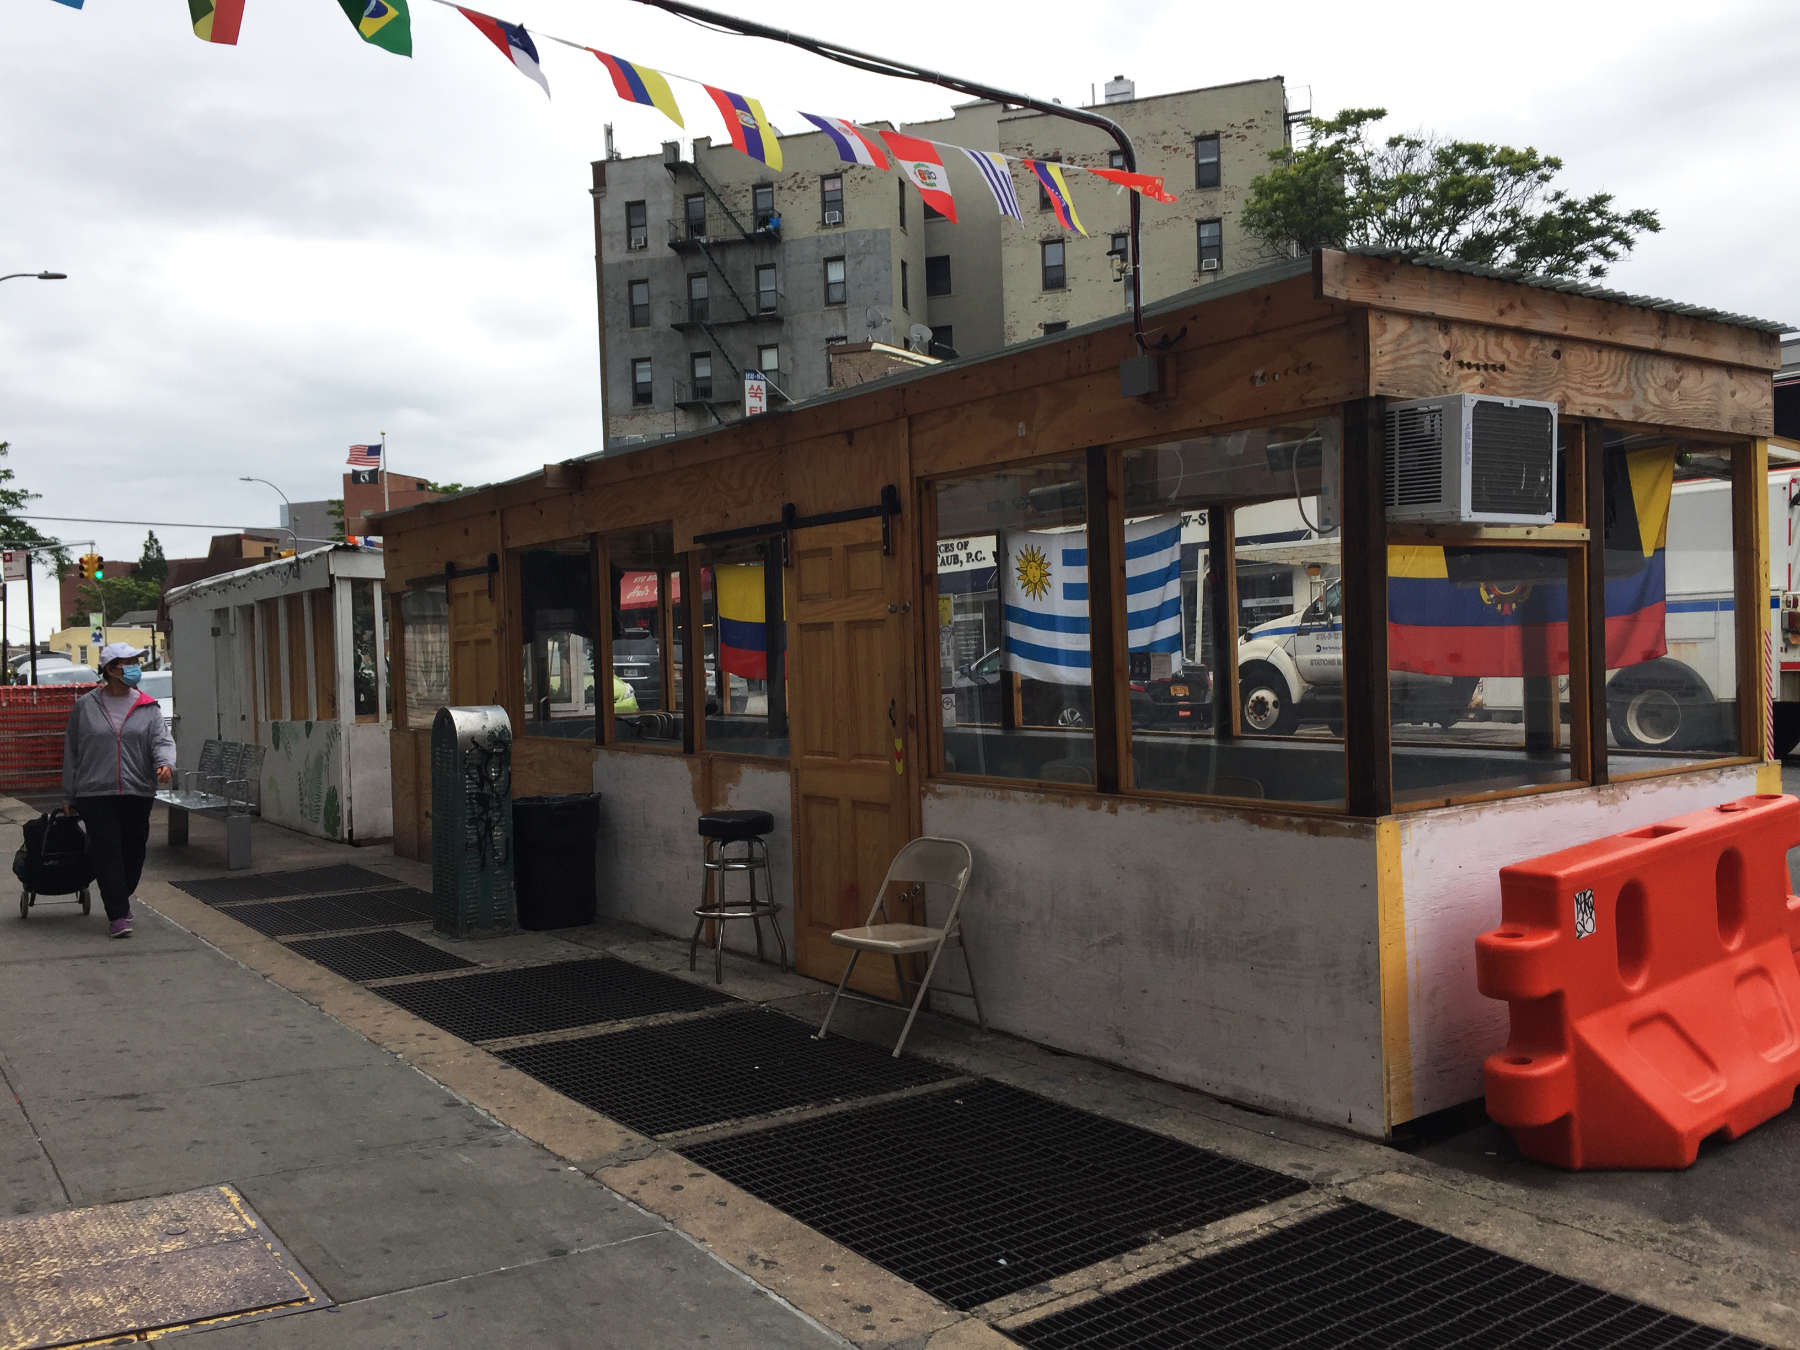 Sidewalk restaurant in Queens NYC